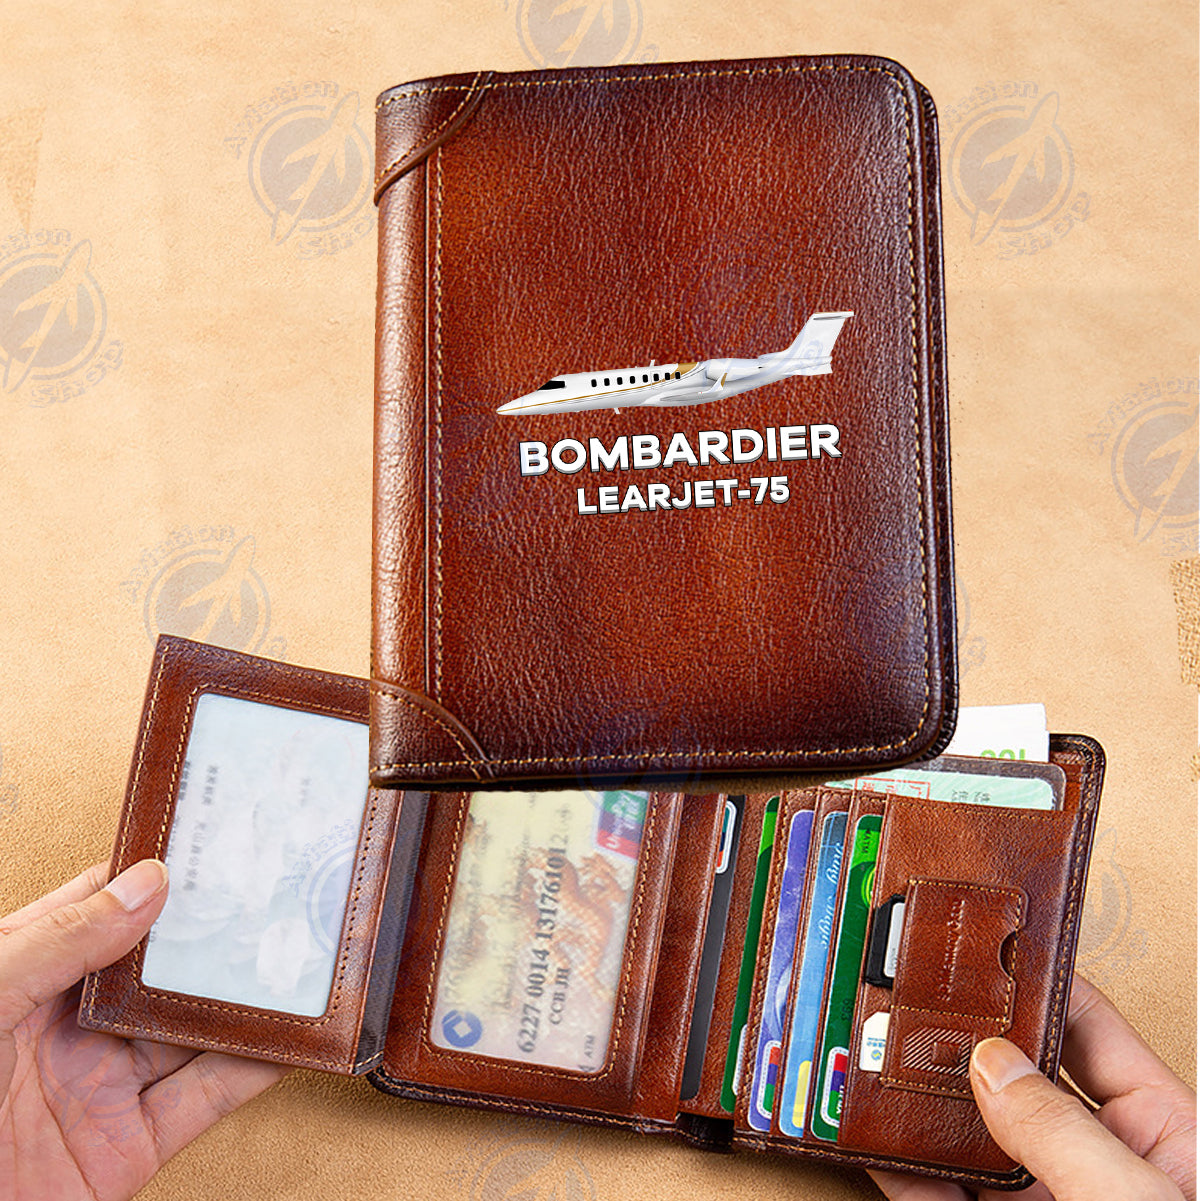 The Bombardier Learjet 75 Designed Leather Wallets